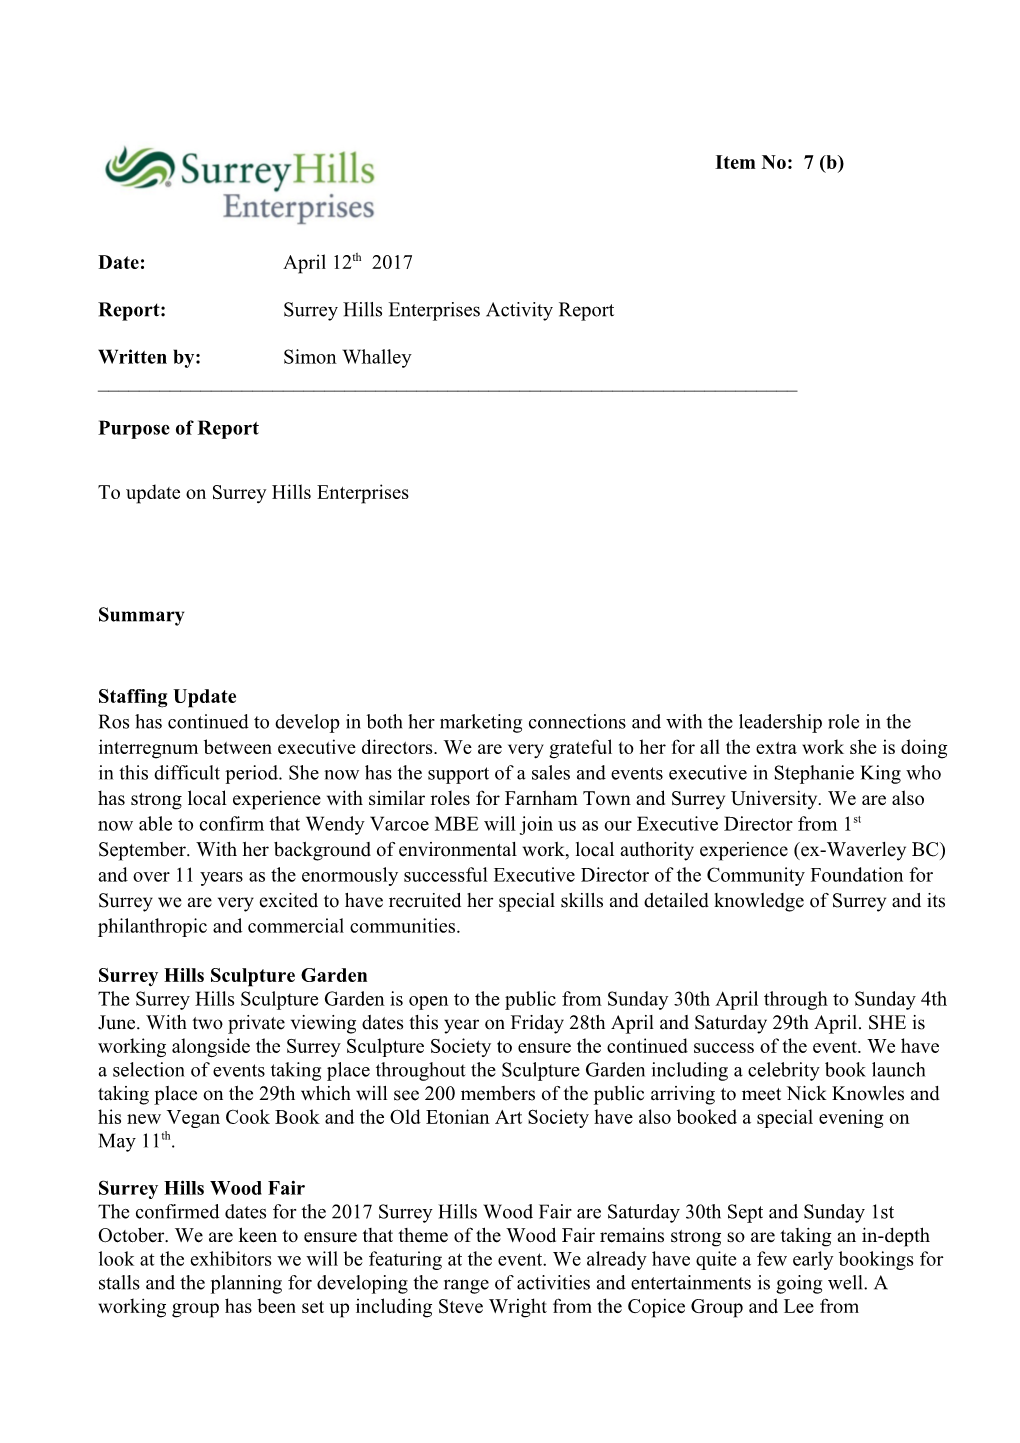 Report: Surrey Hills Enterprises Activity Report